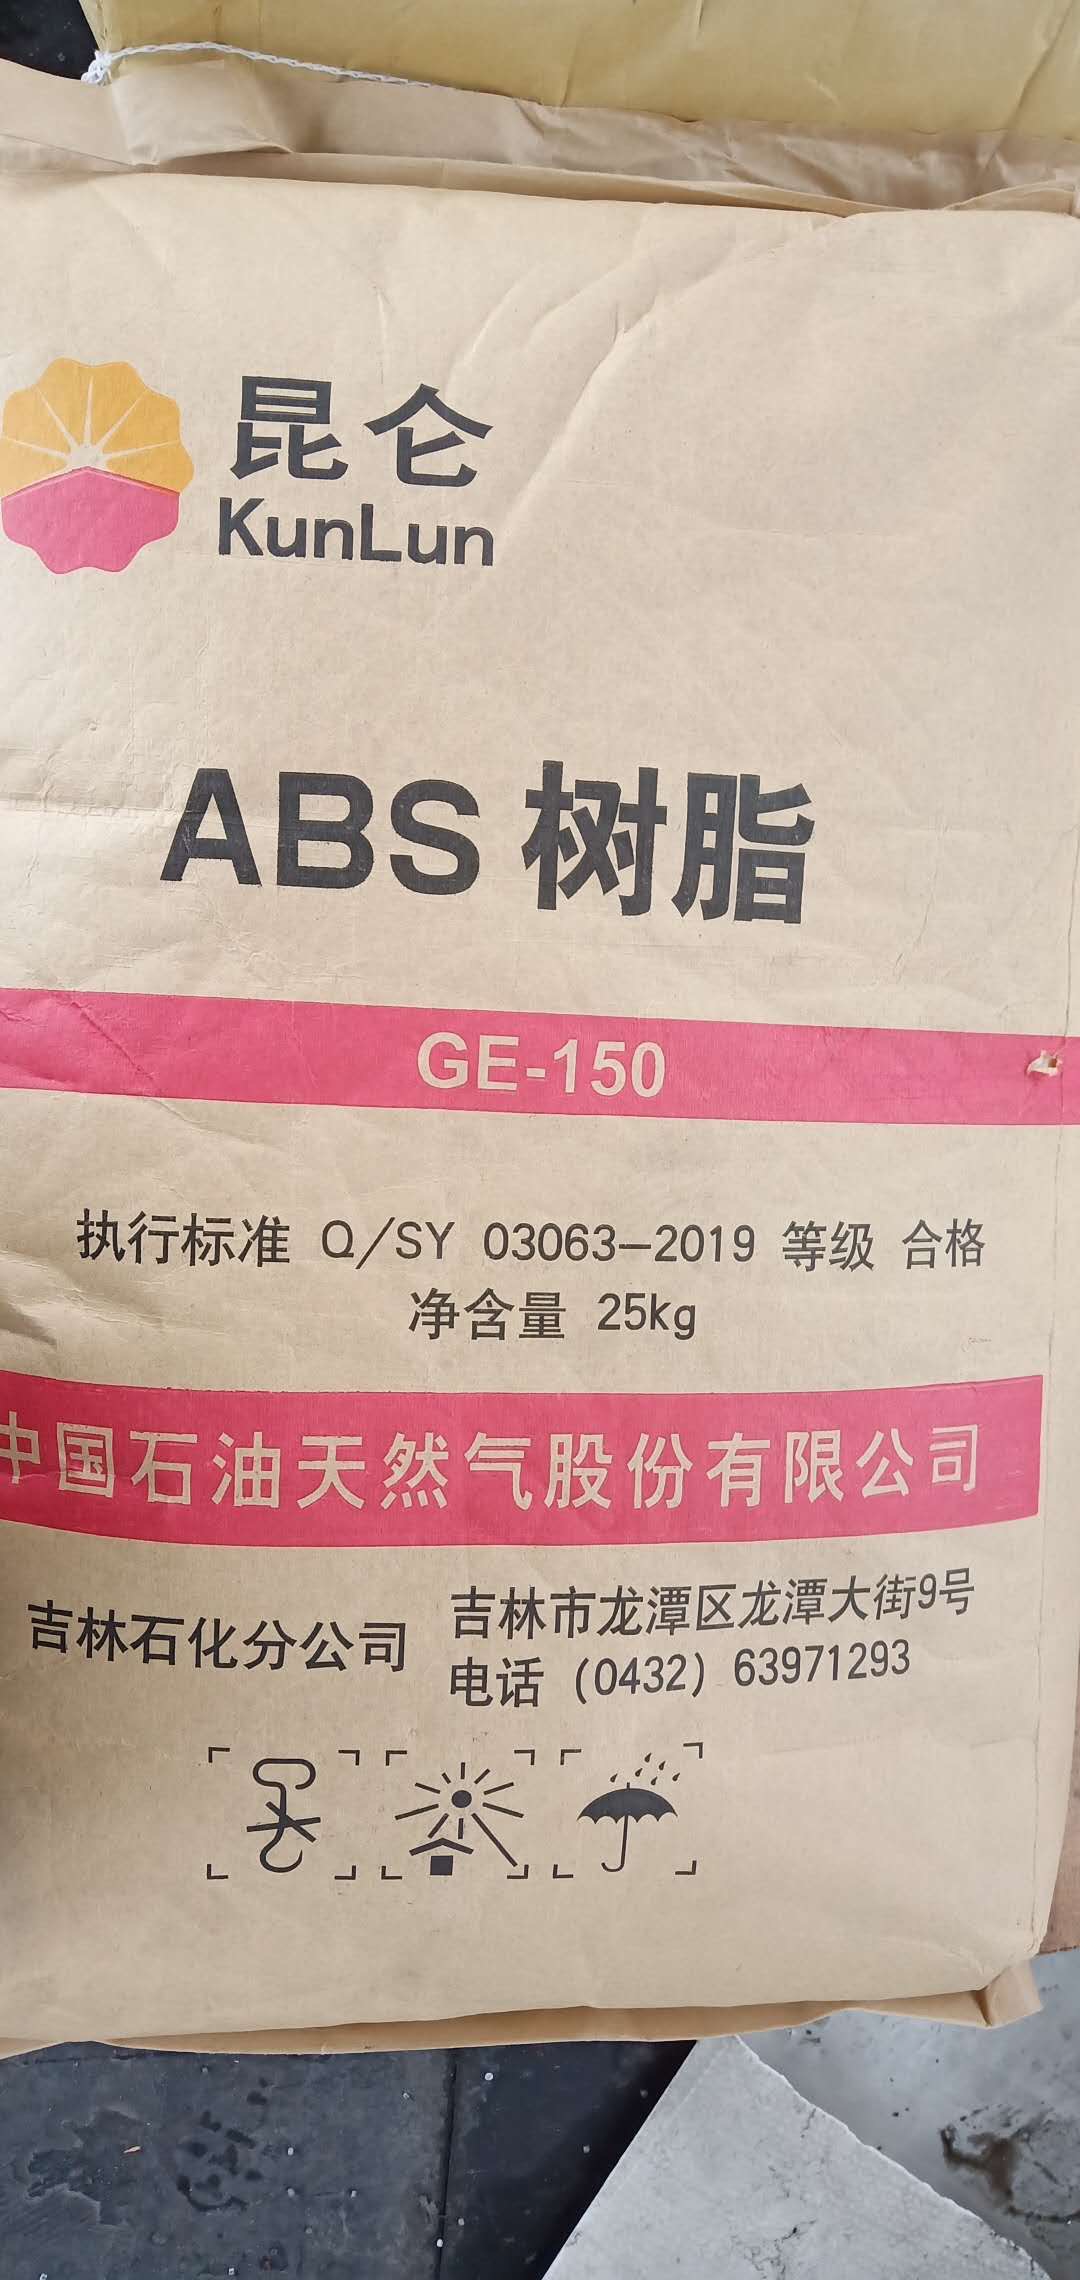 GE-150 中石油吉林 昆仑ABS树脂20209A-5